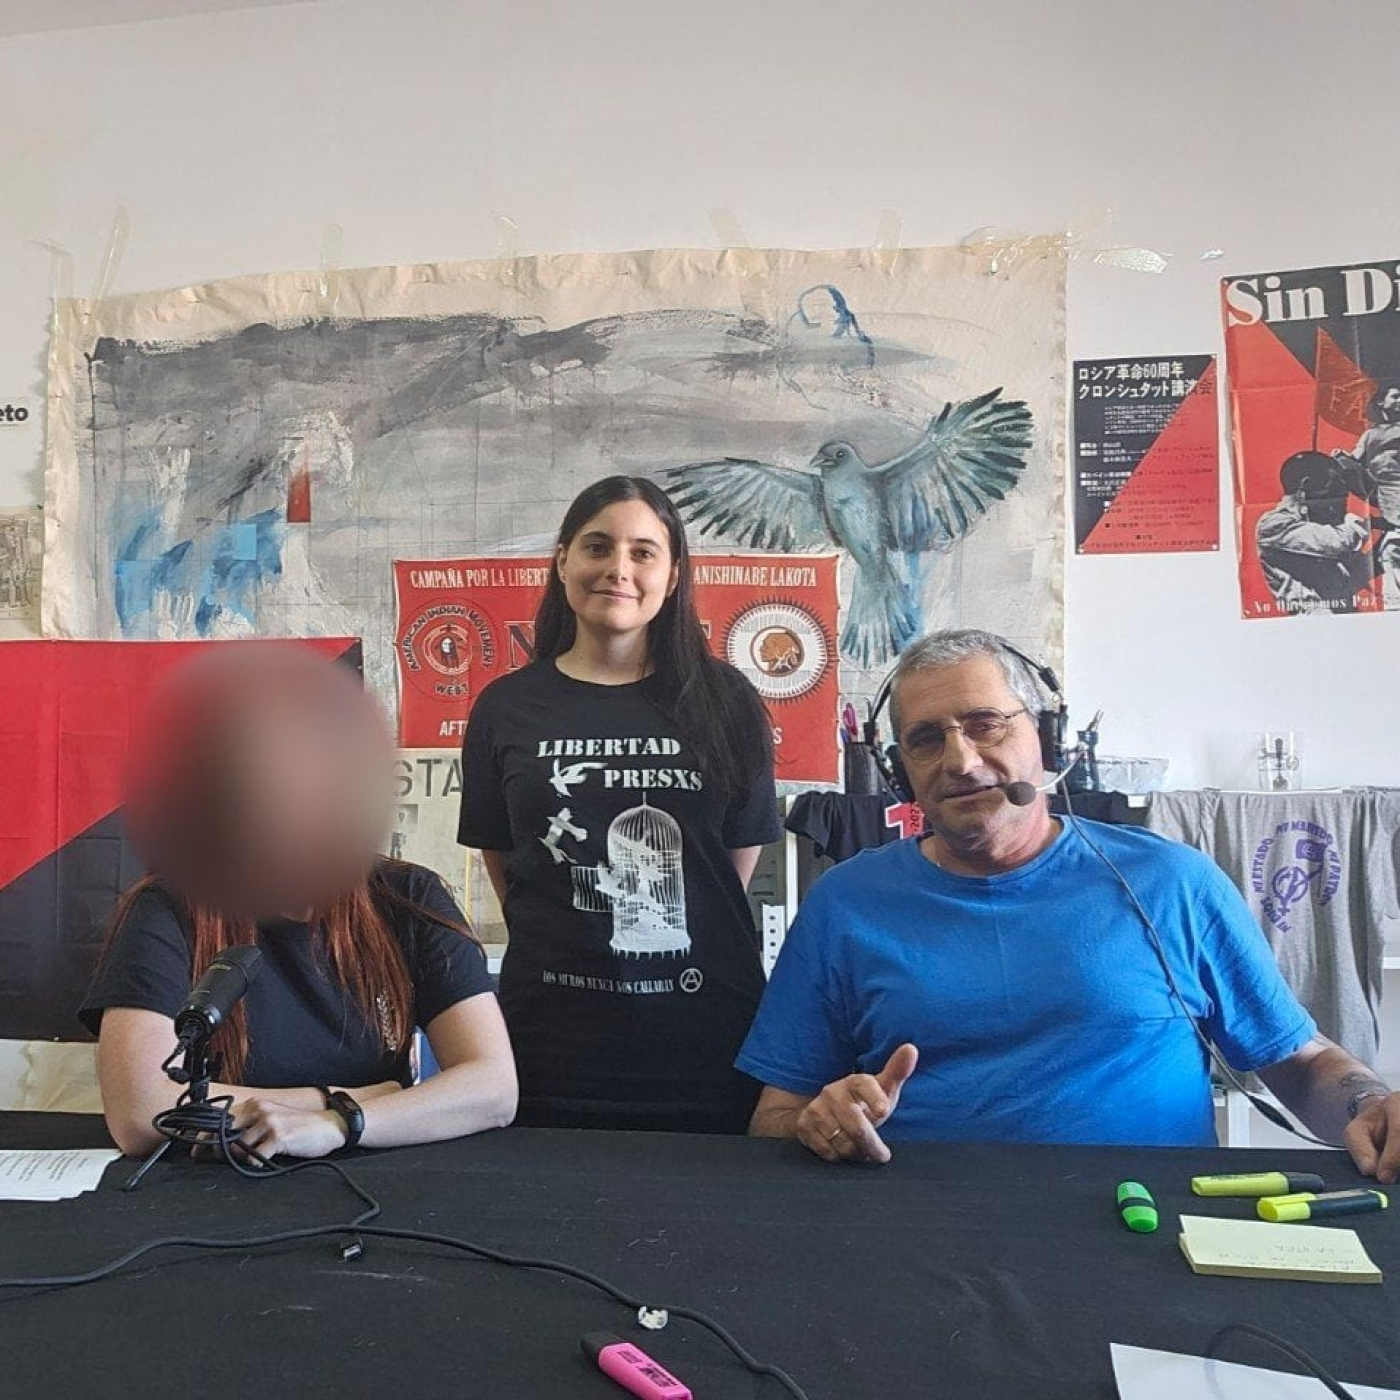 Radio Tirso Libertaria - Vive y Lucha